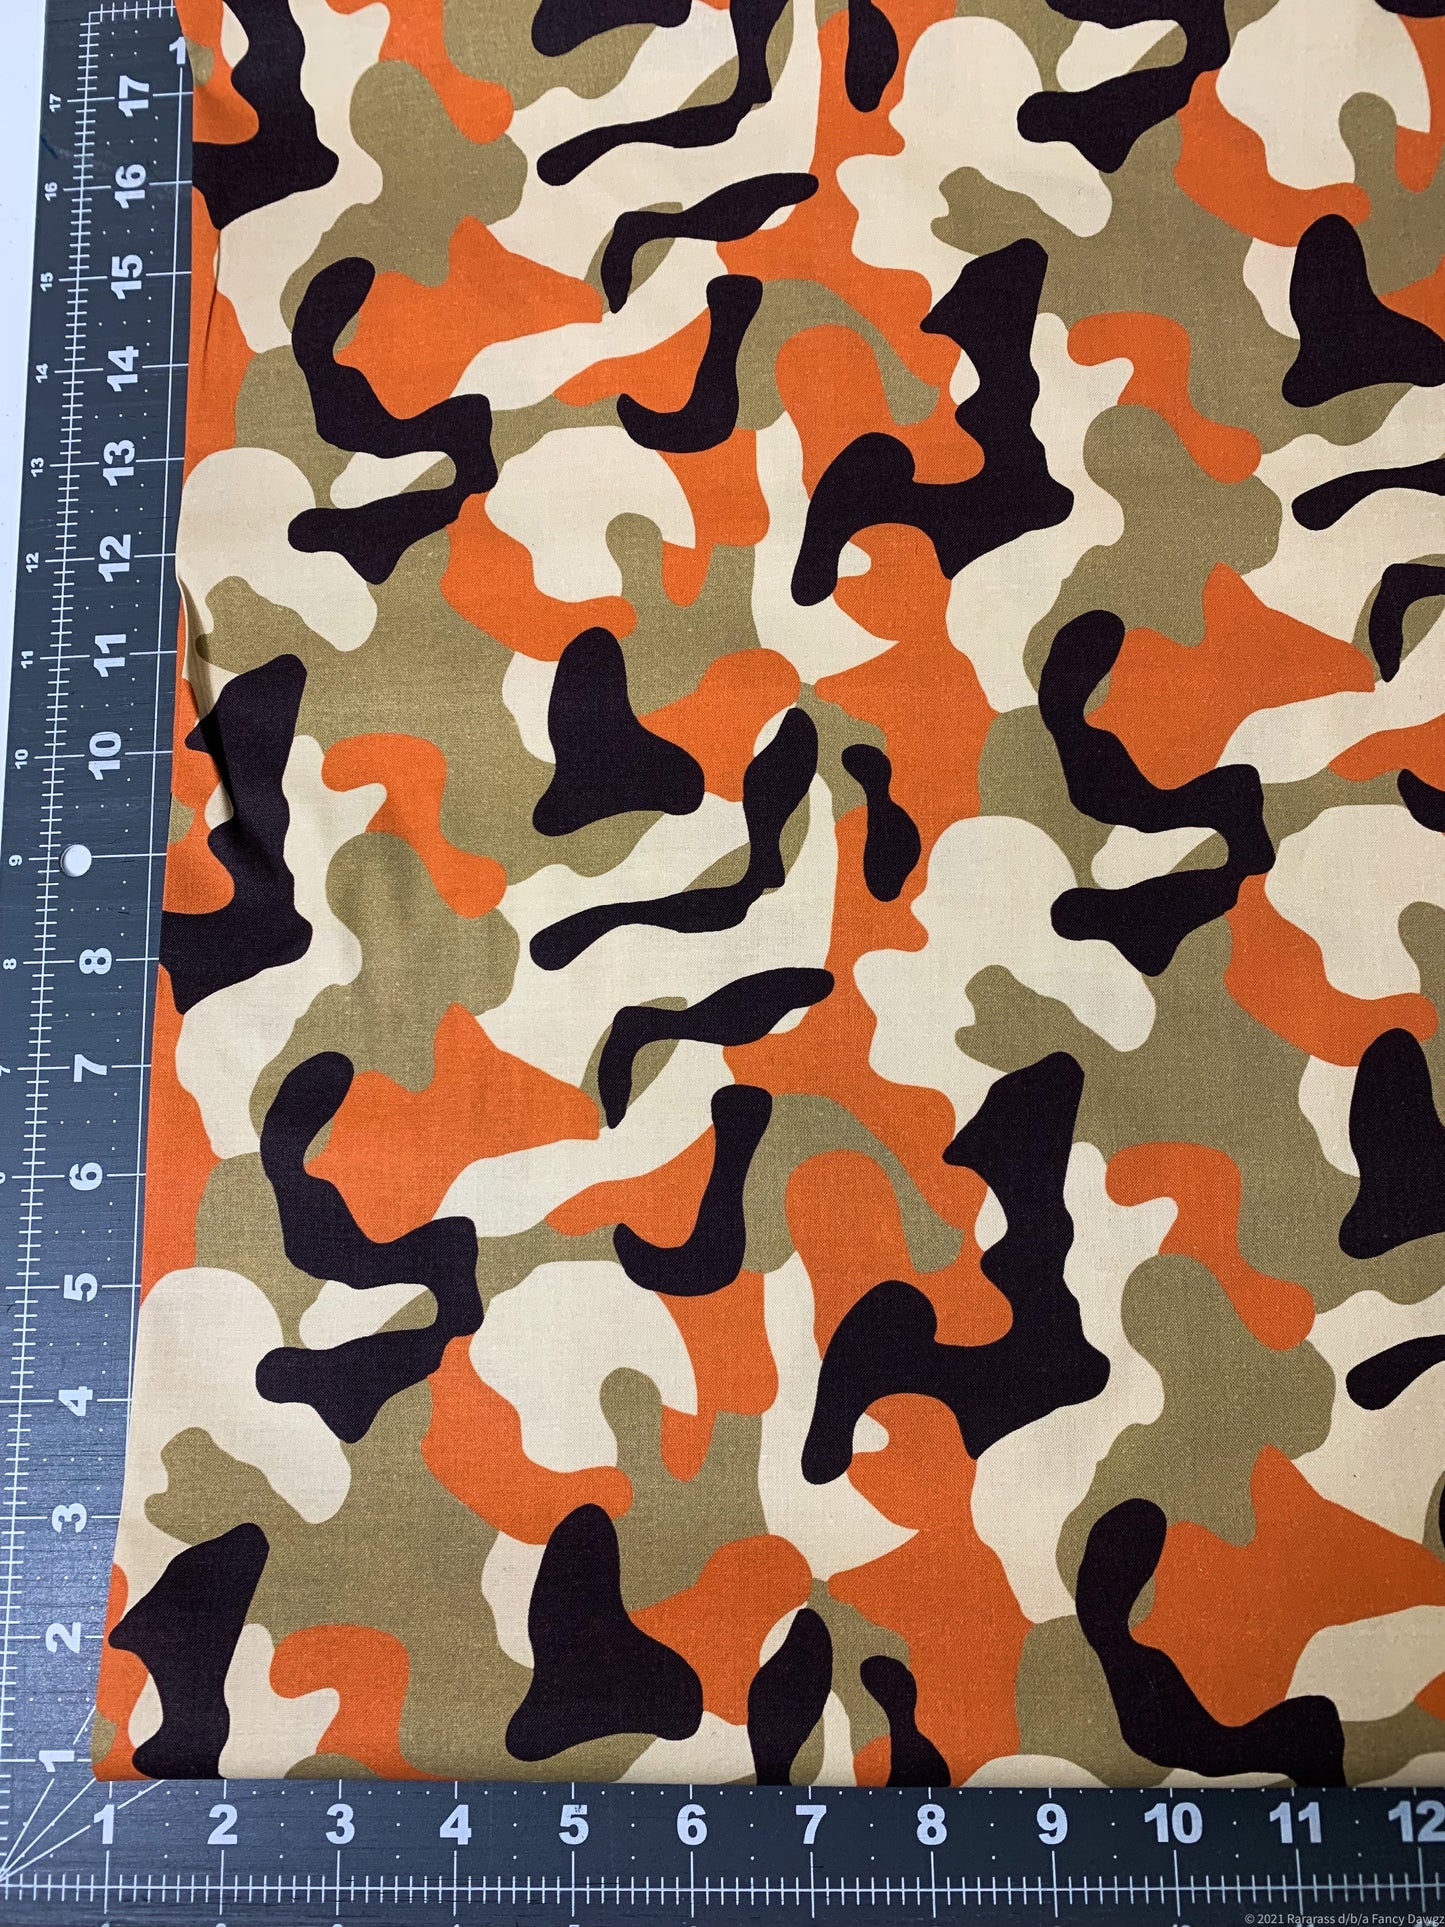 Orange Desert Camouflage fabric10861 Defender of Freedom Camo